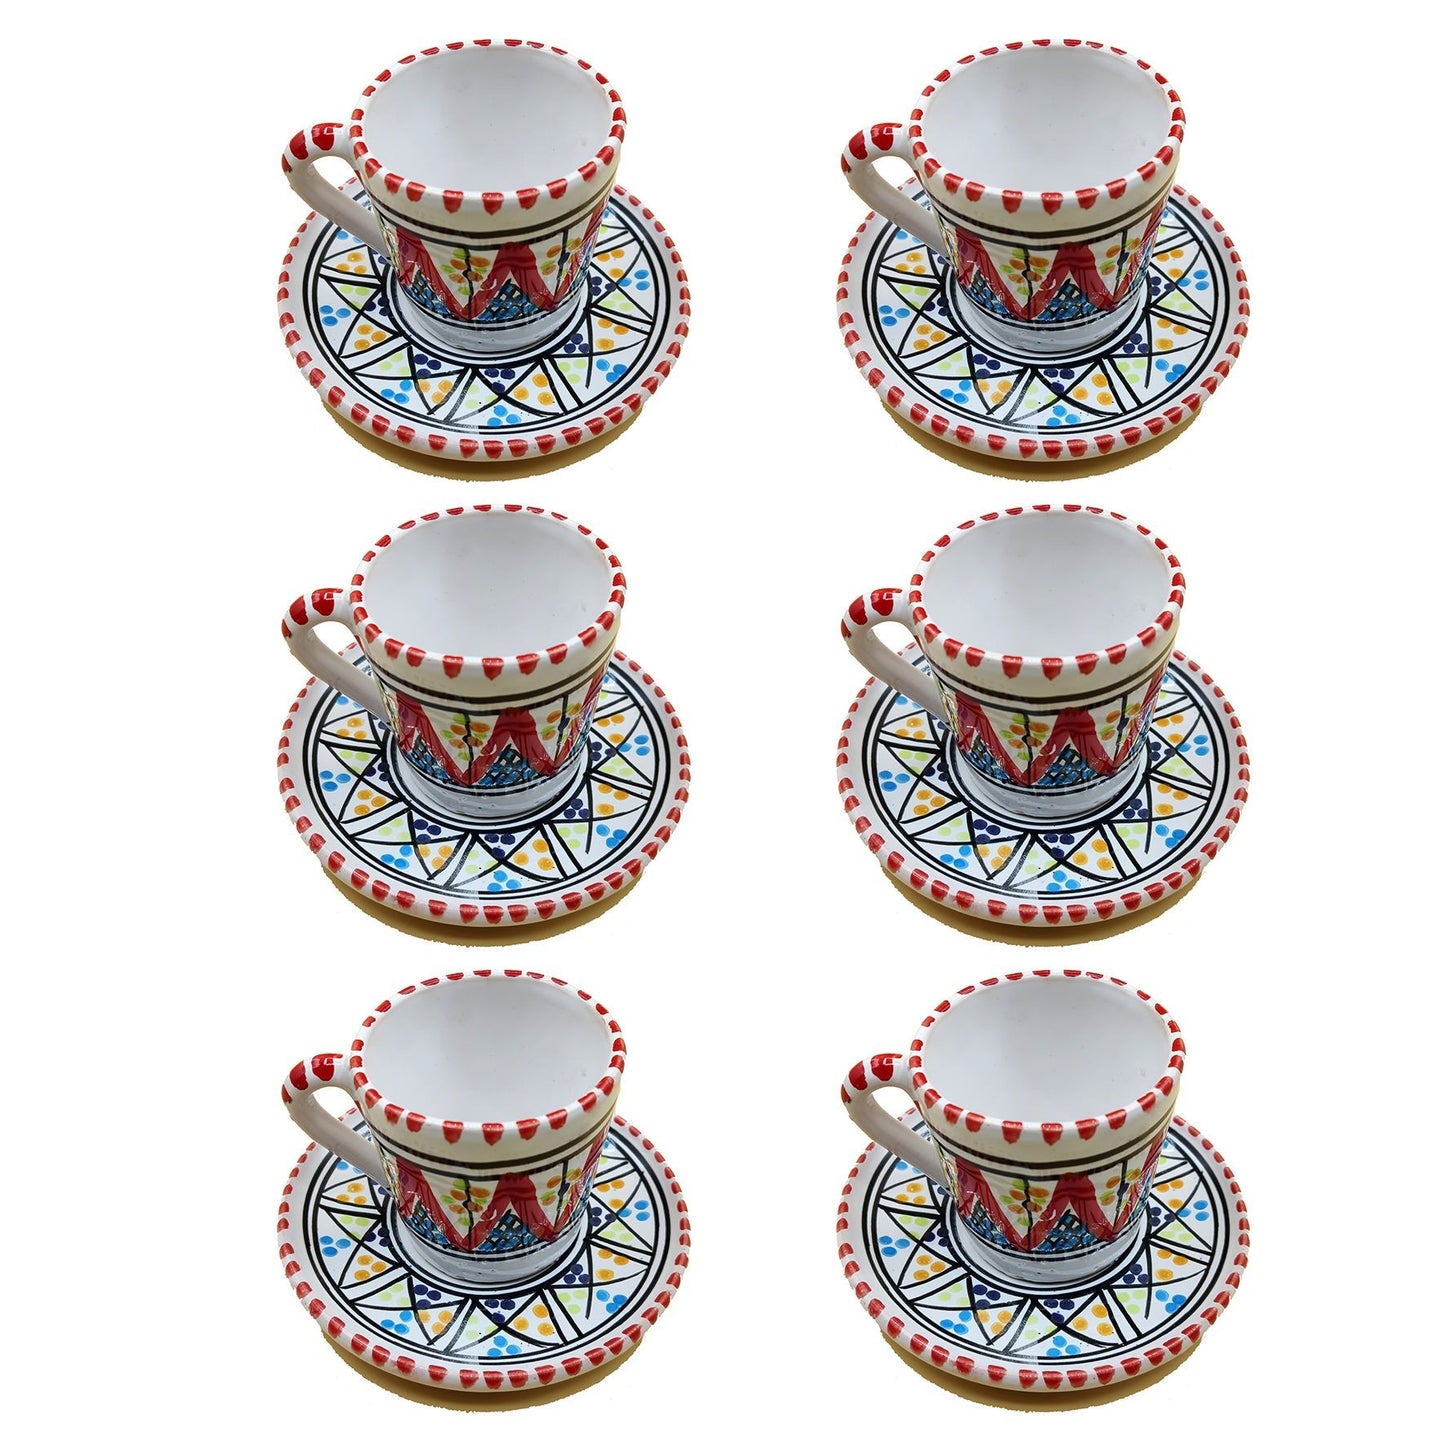 Koffiekopje Servies Keramiek Handbeschilderd Tunesisch Marokkaans 1211200917